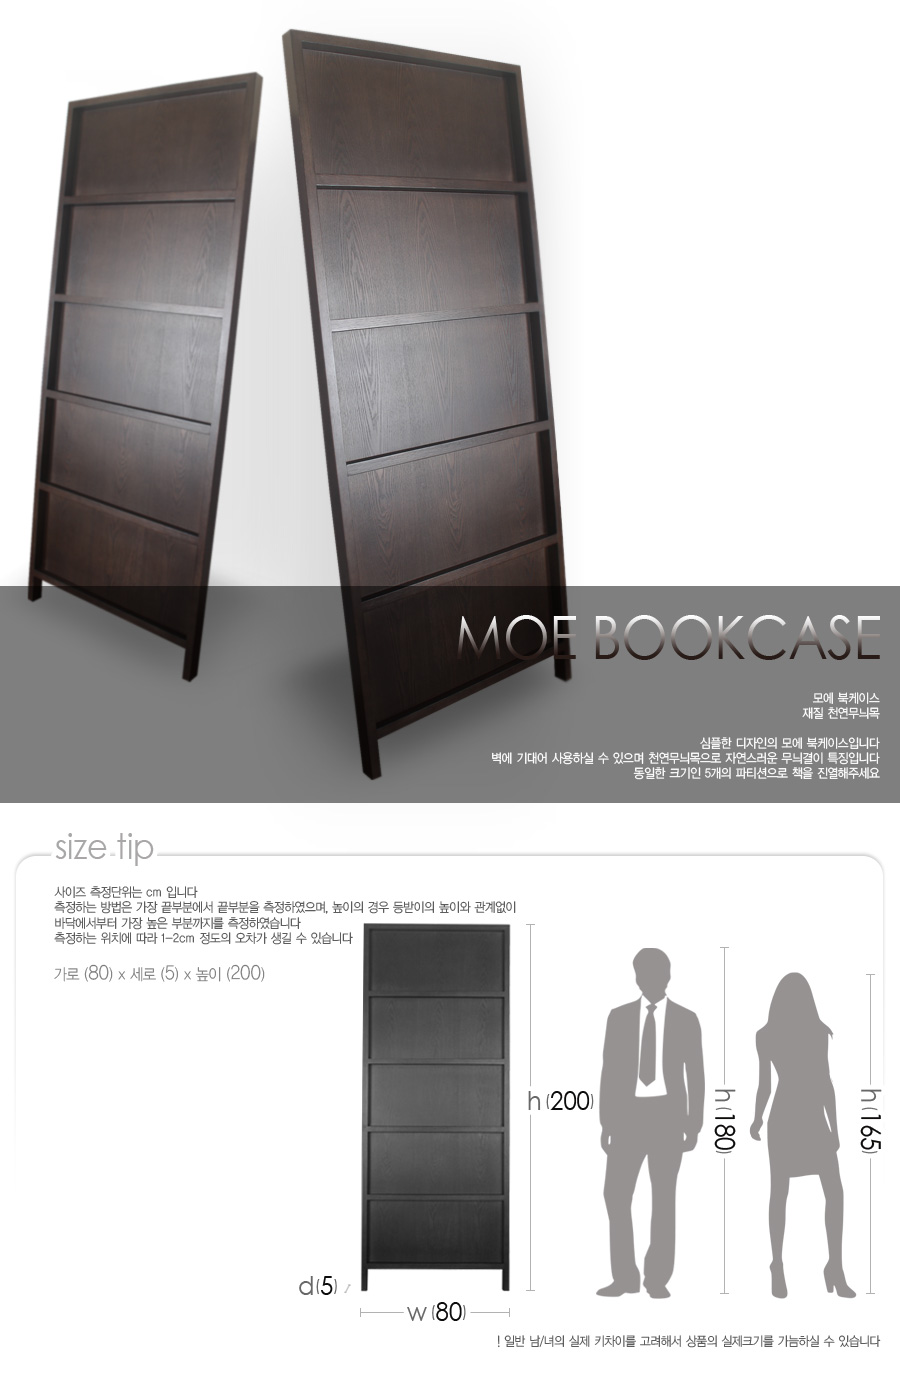 moe-bookcase_01.jpg